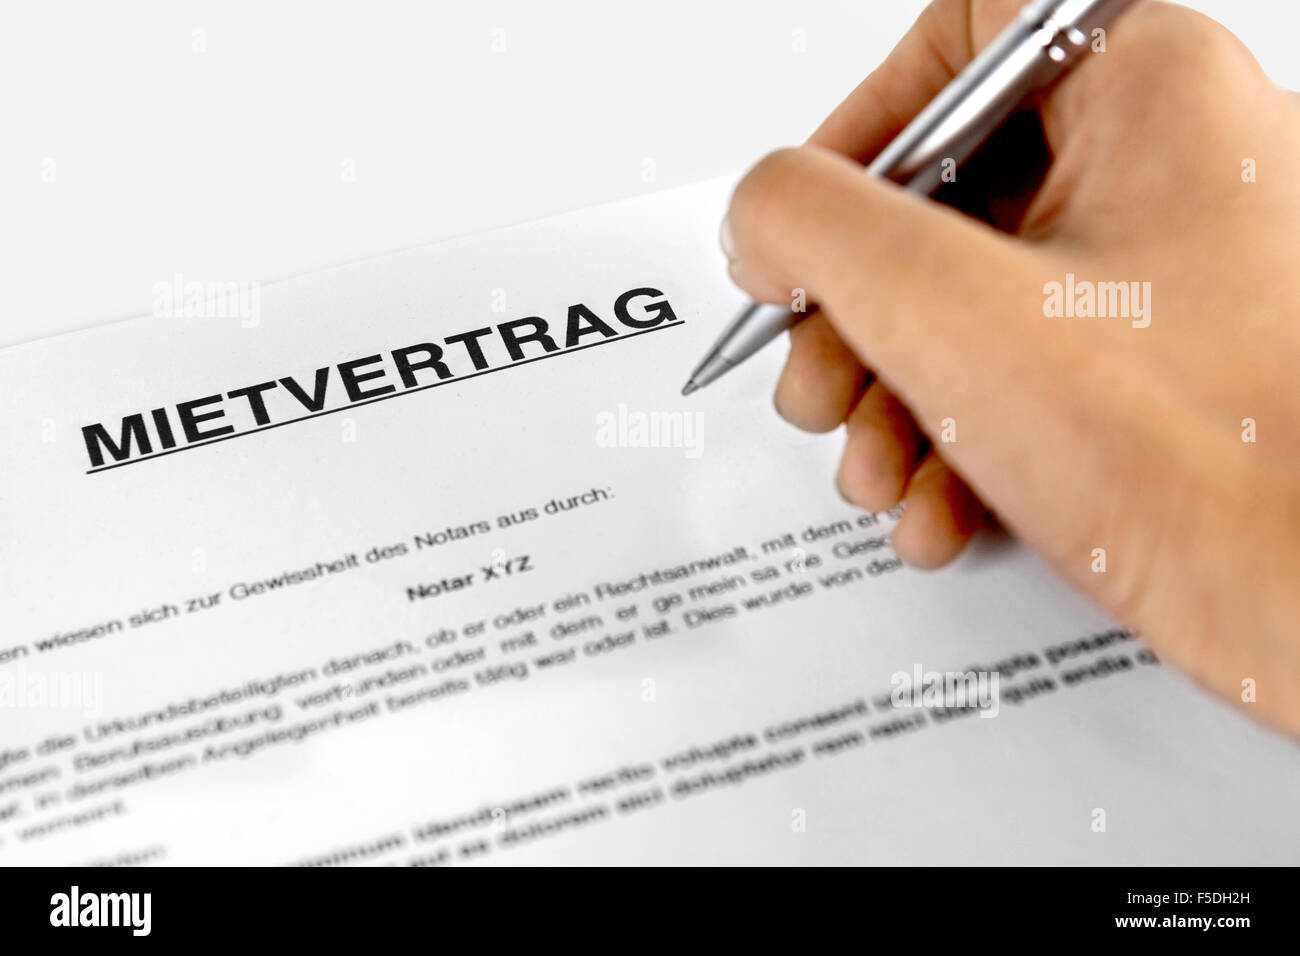 Il contratto di noleggio forma con la firma a mano - parola tedesca "ietvertrag' Foto Stock